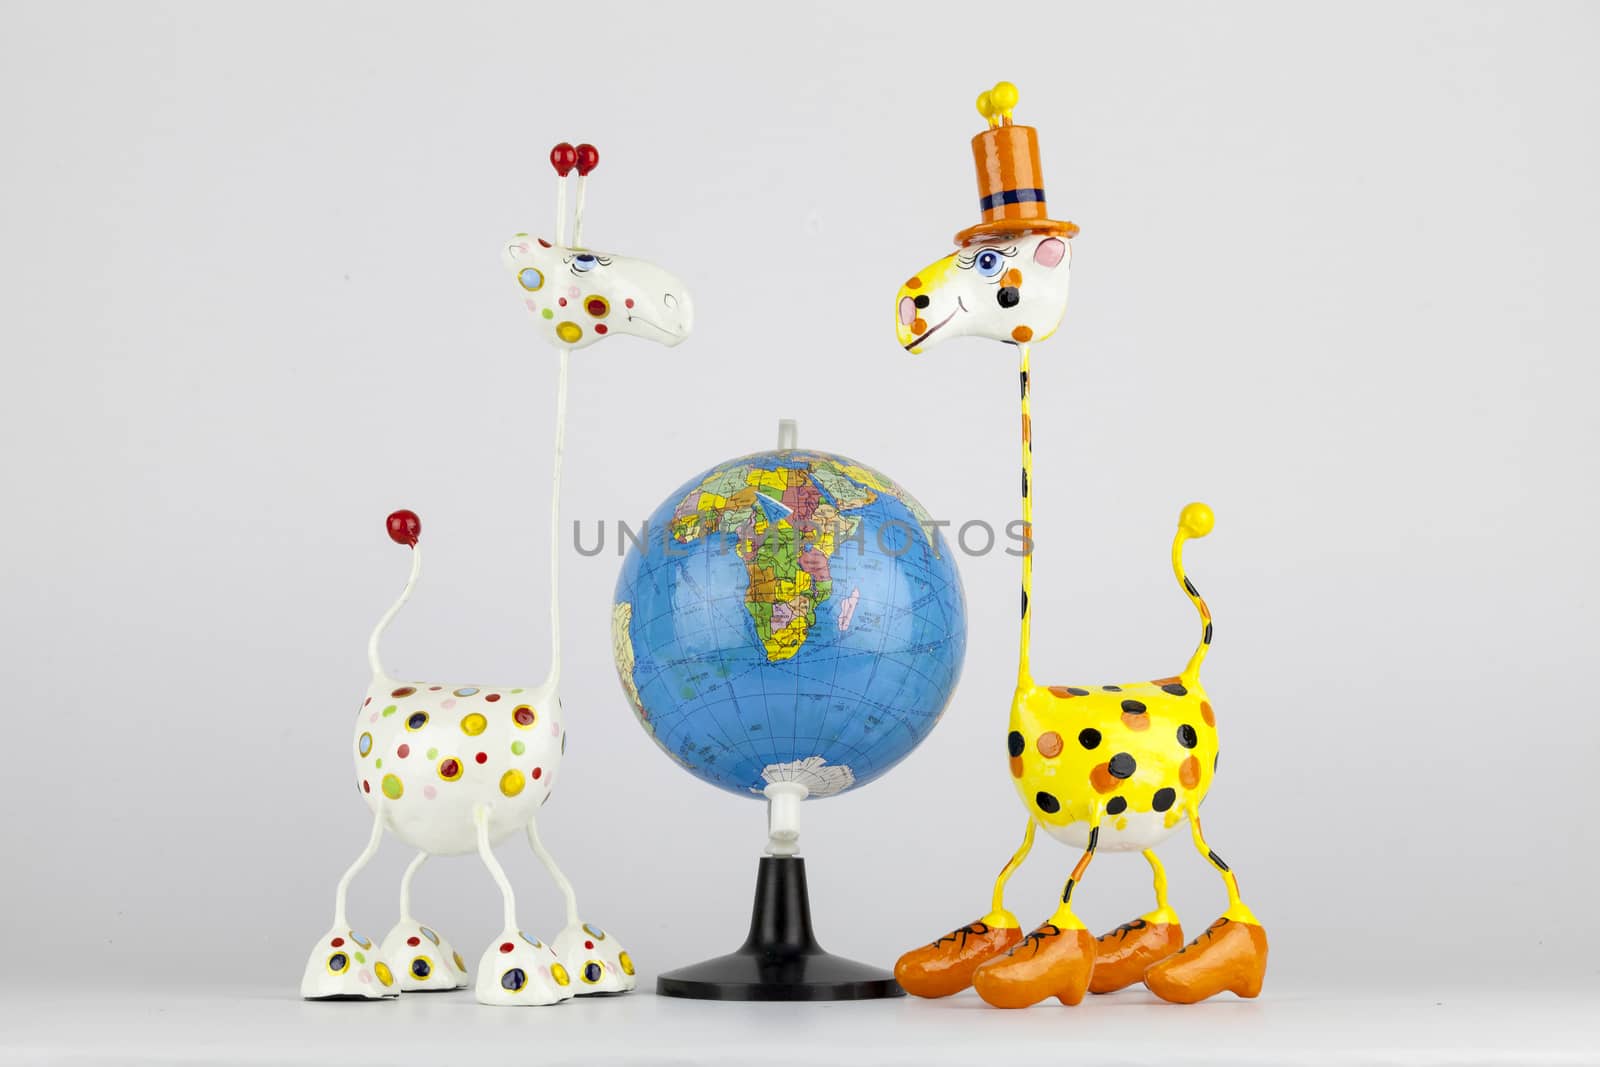 World of giraffe by Chattranusorn09